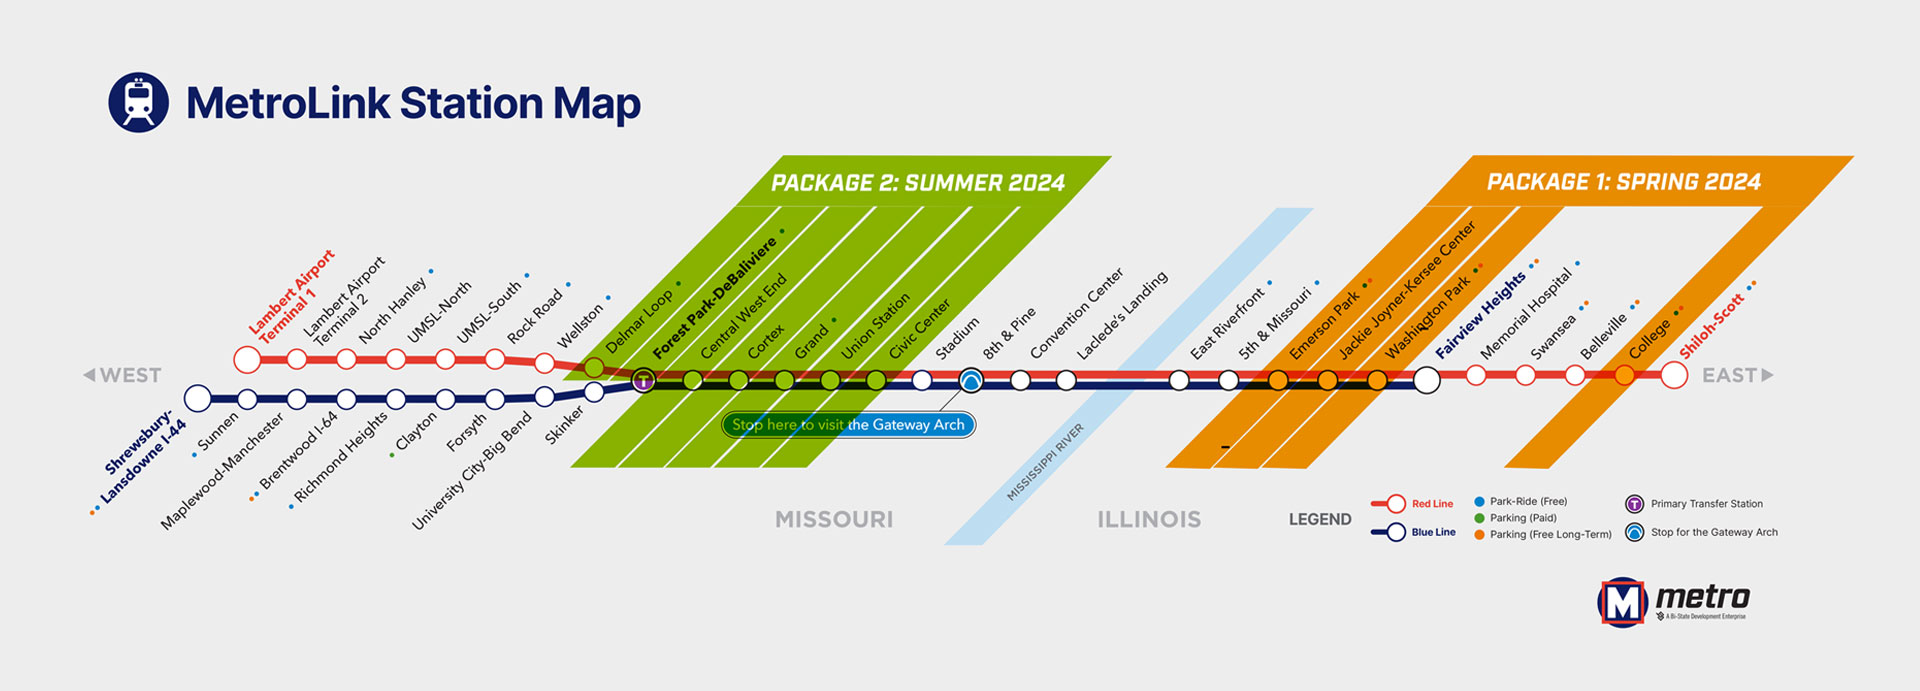 A timeline map of the MetroLink station updates.